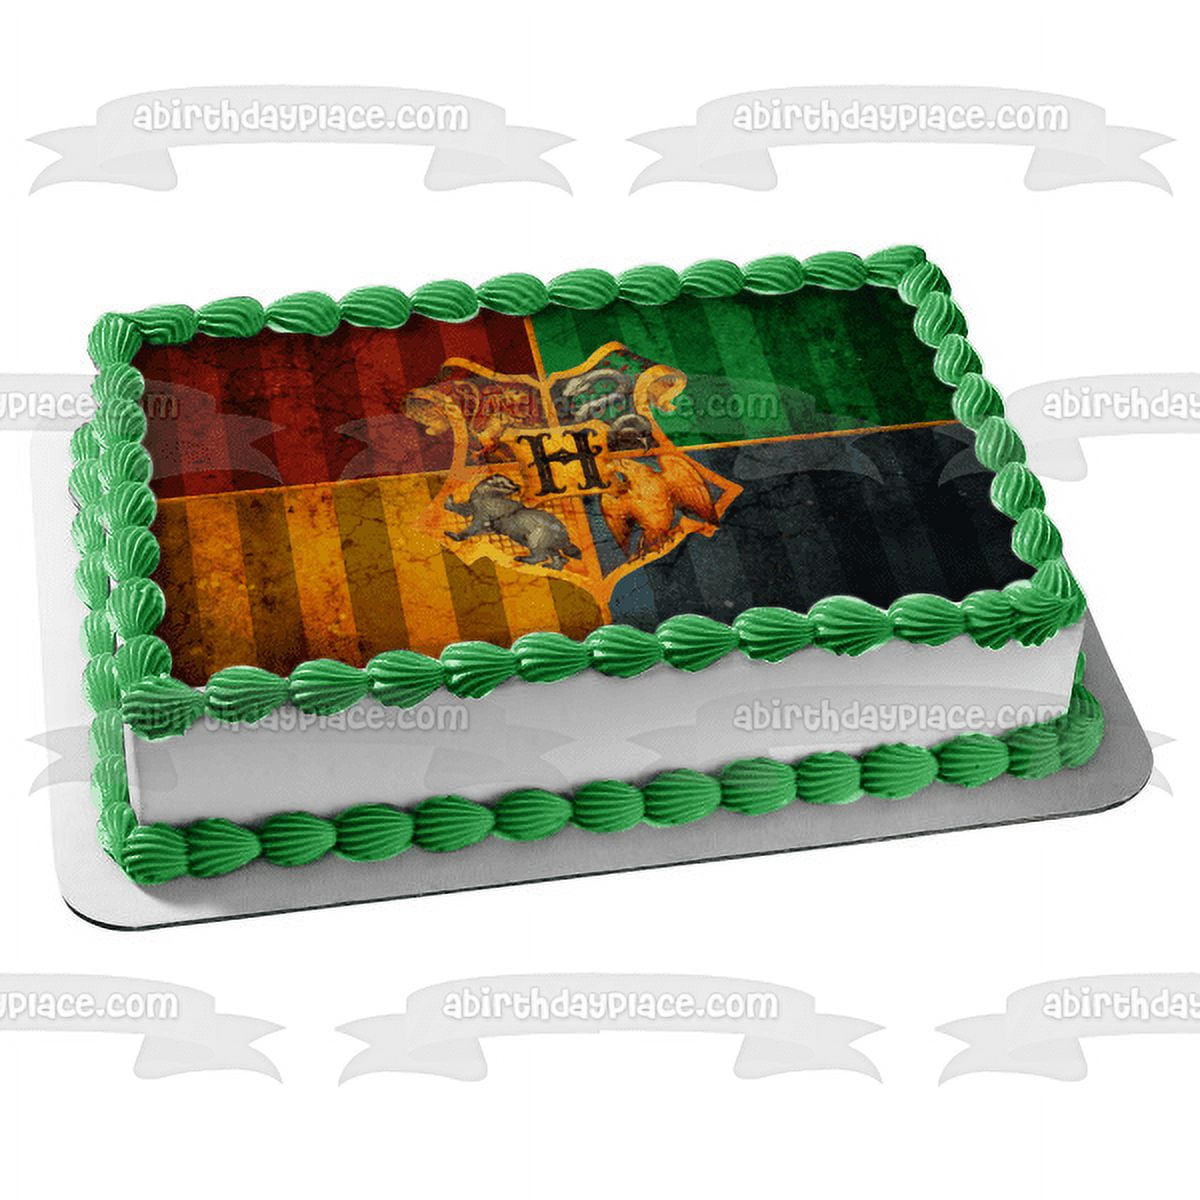 Harry Potter - Edible Cake Topper - 11.7 x 17.5 Inches 1/2 Sheet  rectangular 